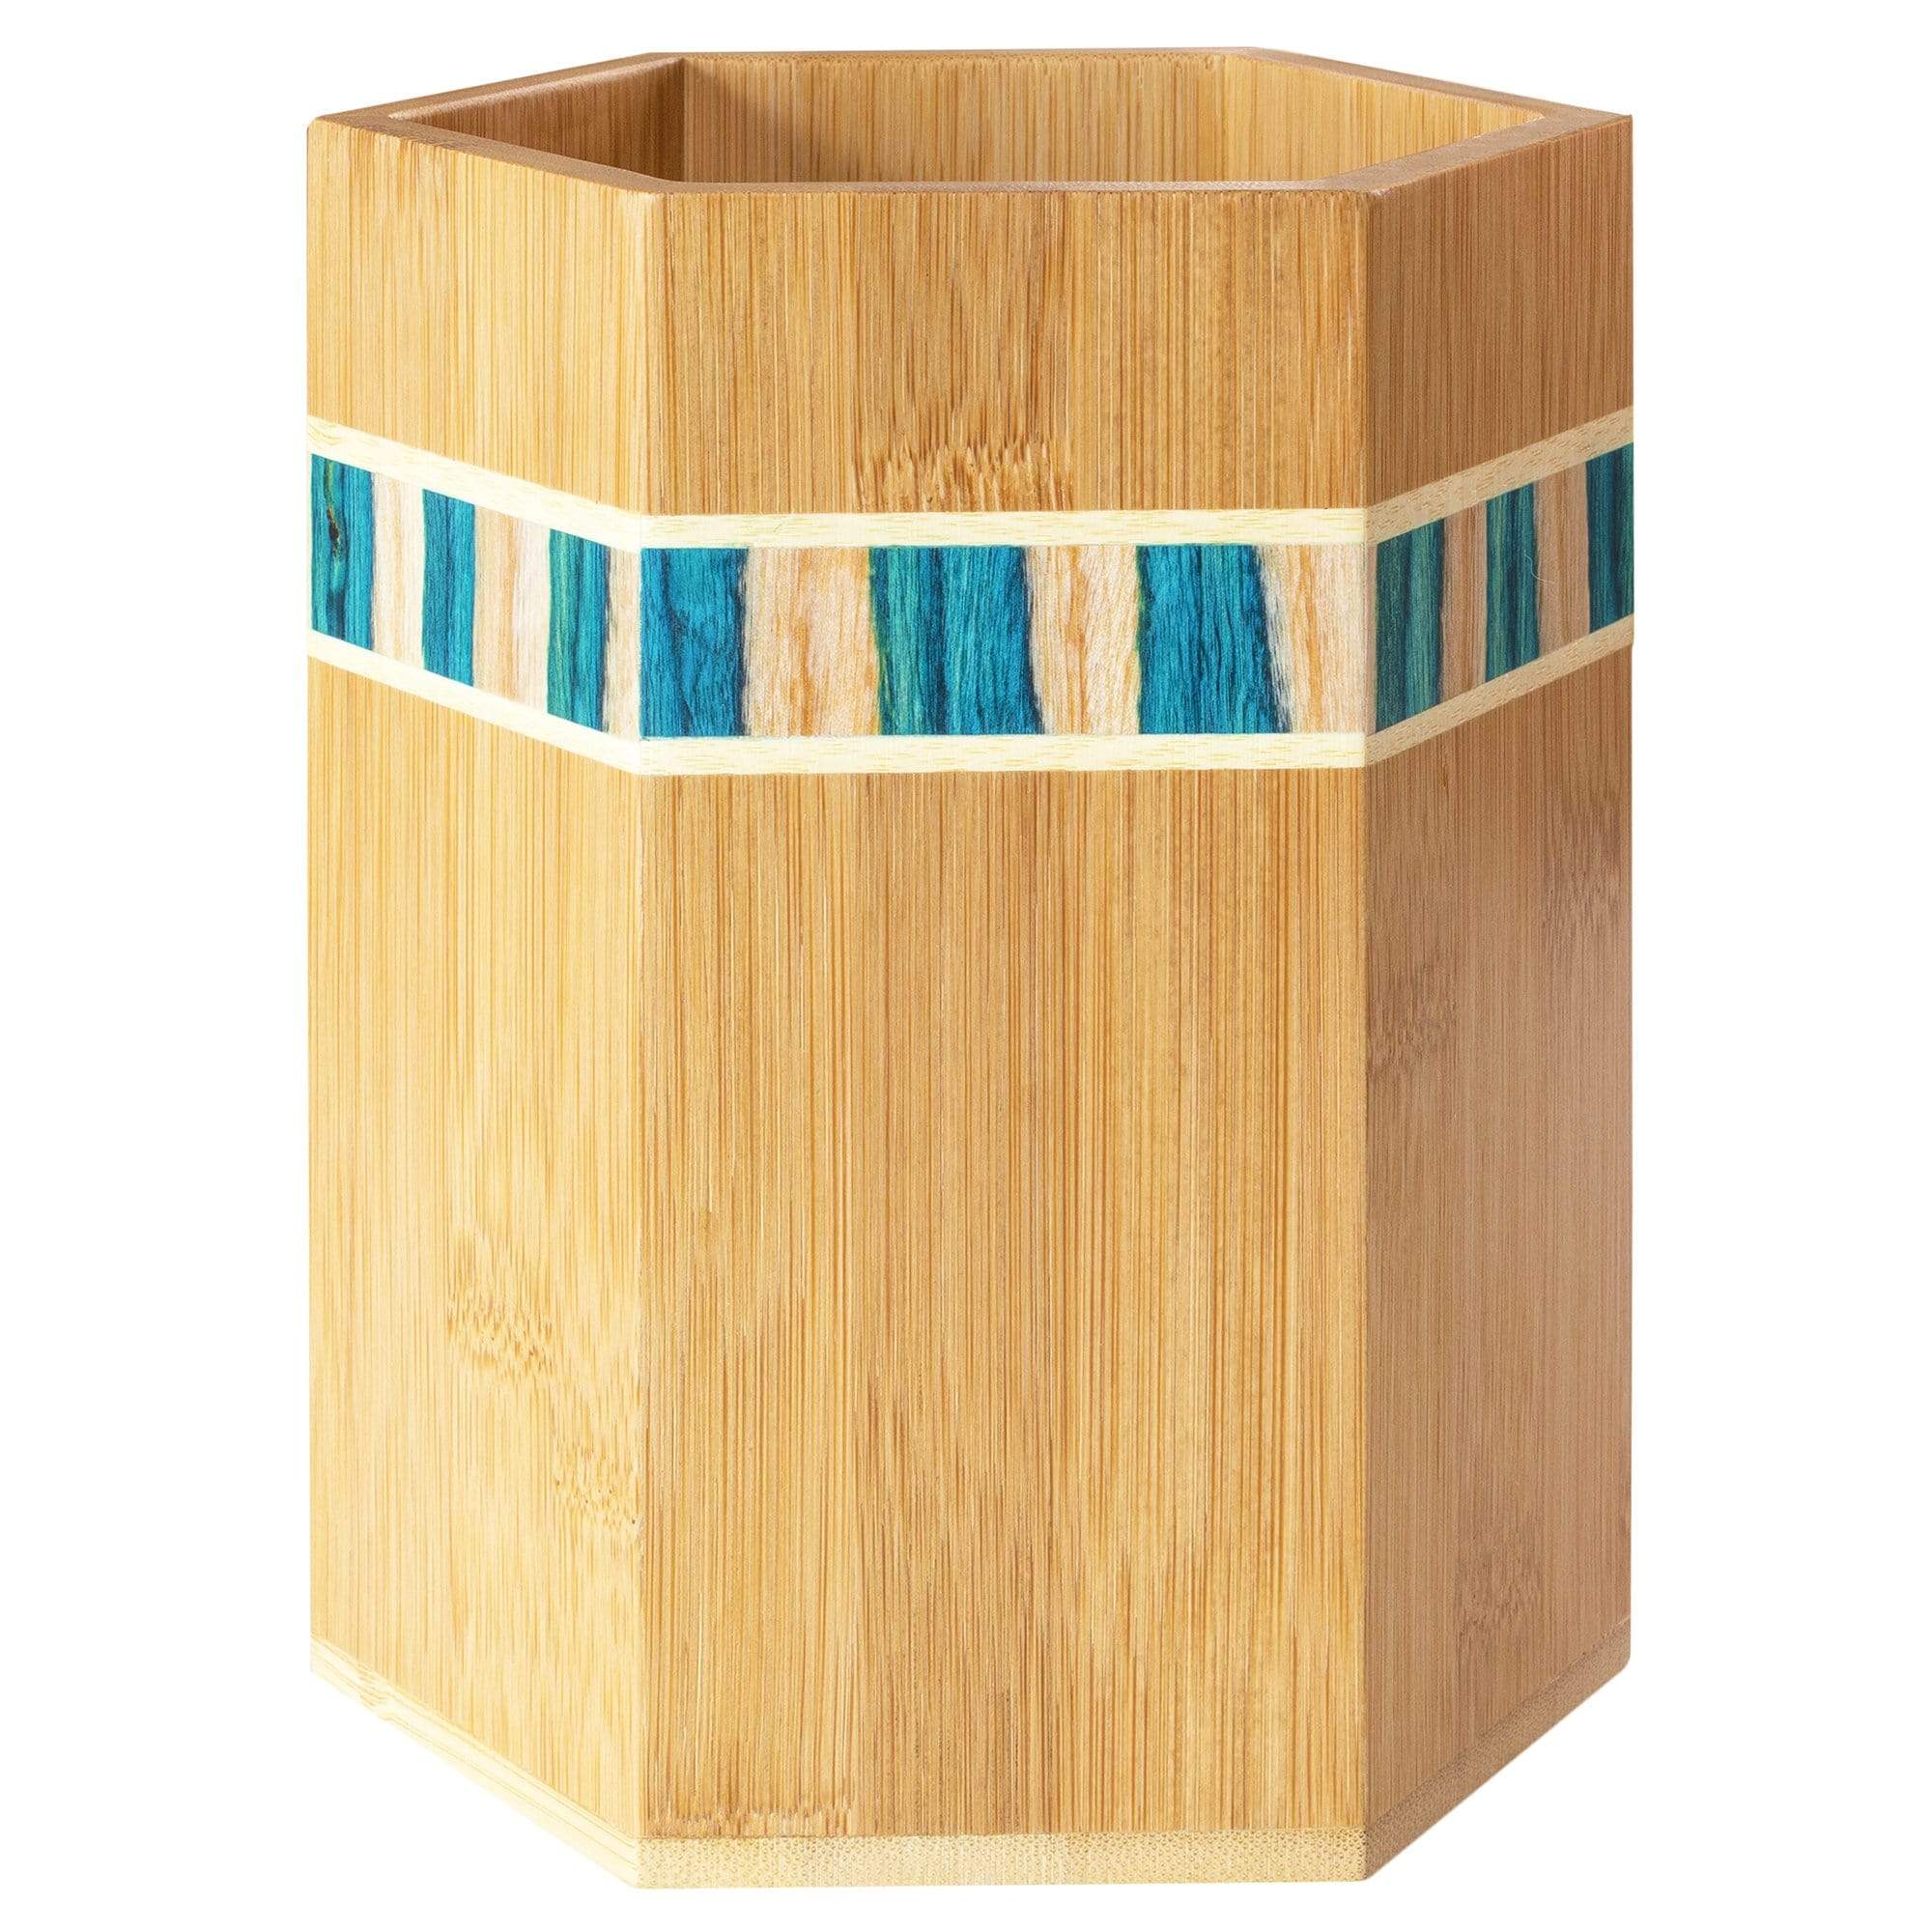 Totally Bamboo Baltique® Mykonos Collection Kitchen Utensil Holder